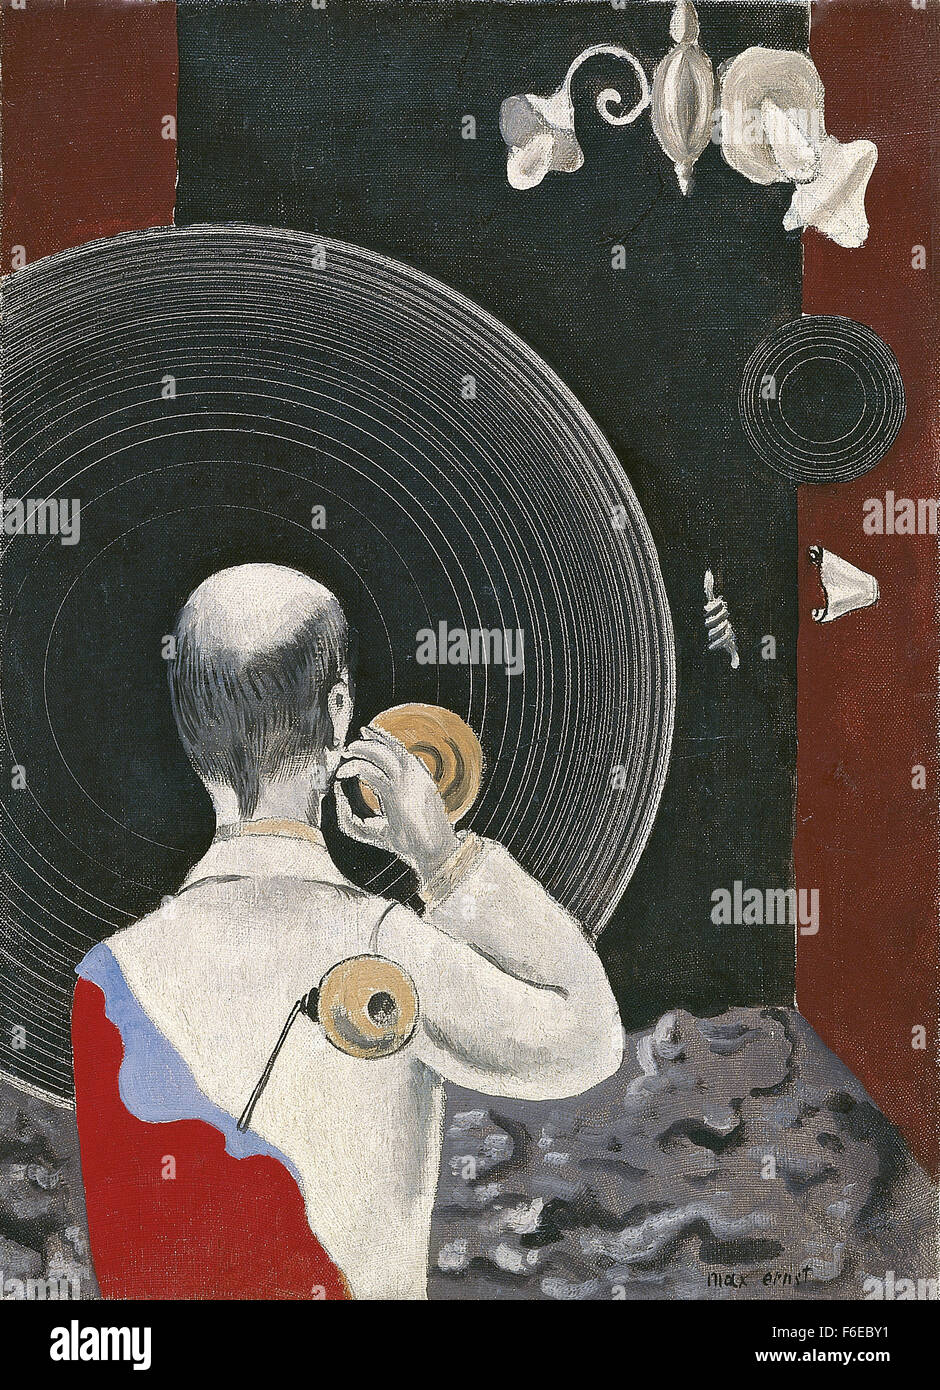 Max Ernst - Untitled (Dada) Stock Photo